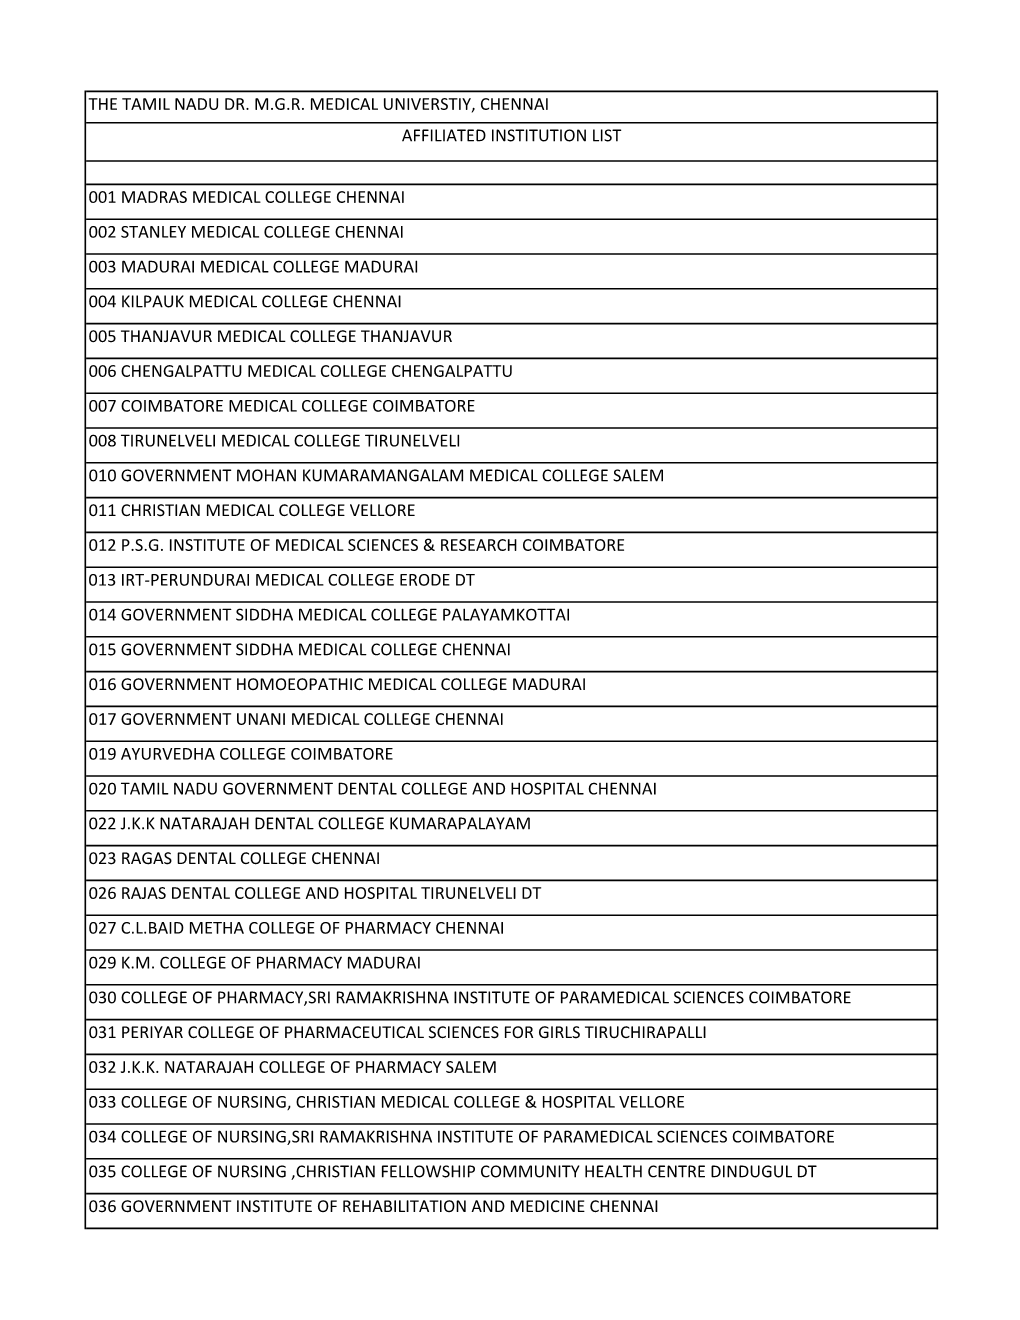 The Tamil Nadu Dr. M.G.R. Medical Universtiy, Chennai Affiliated Institution List